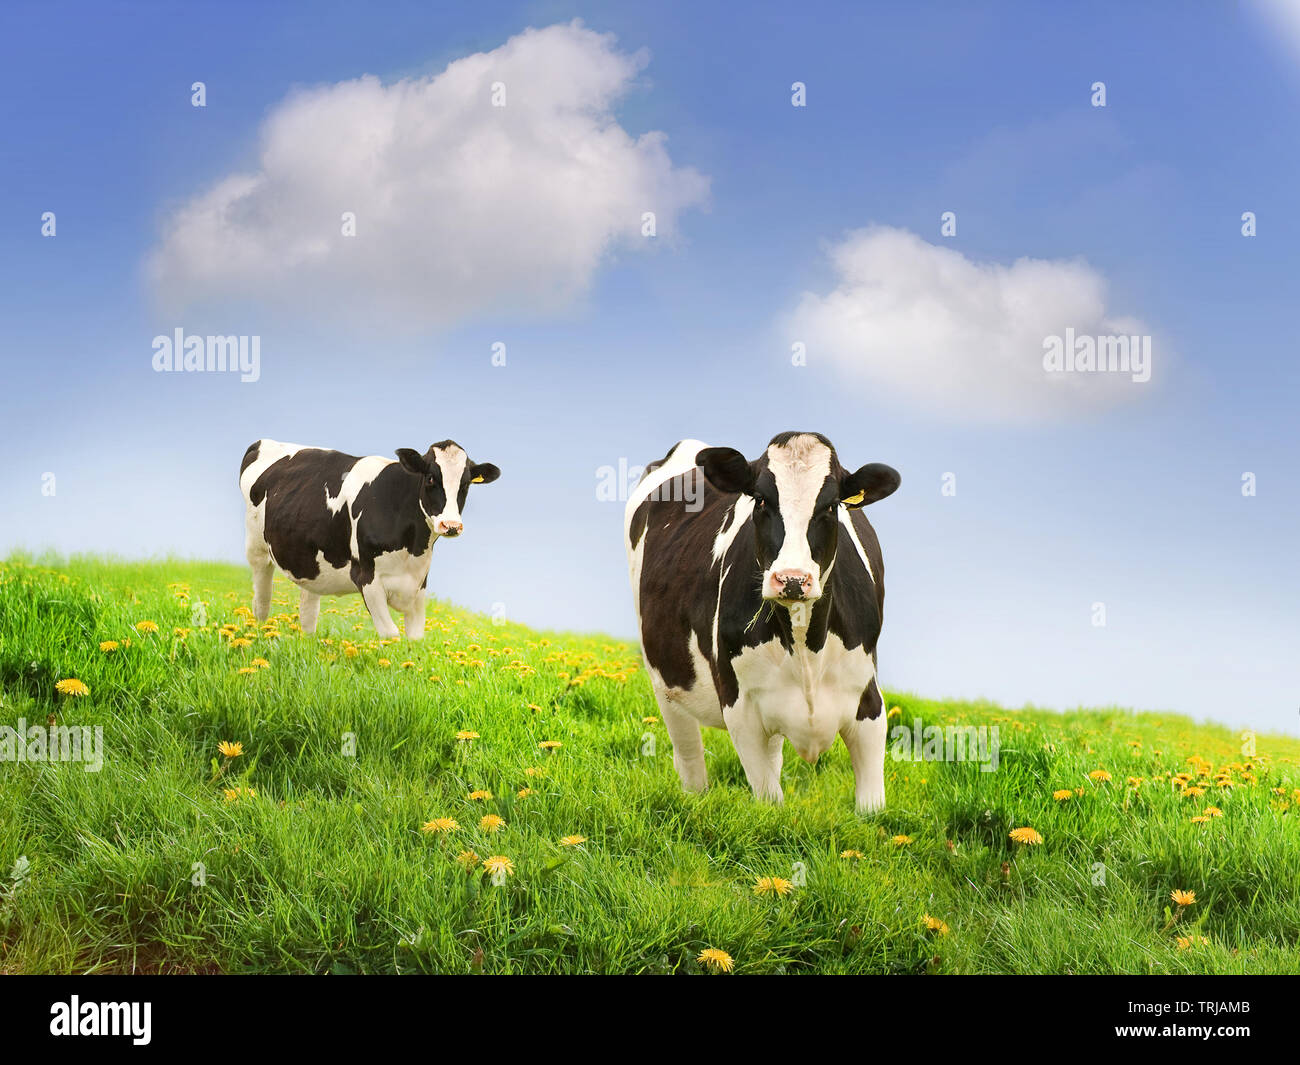 Friesan Milking cows in a green field. Stock Photo